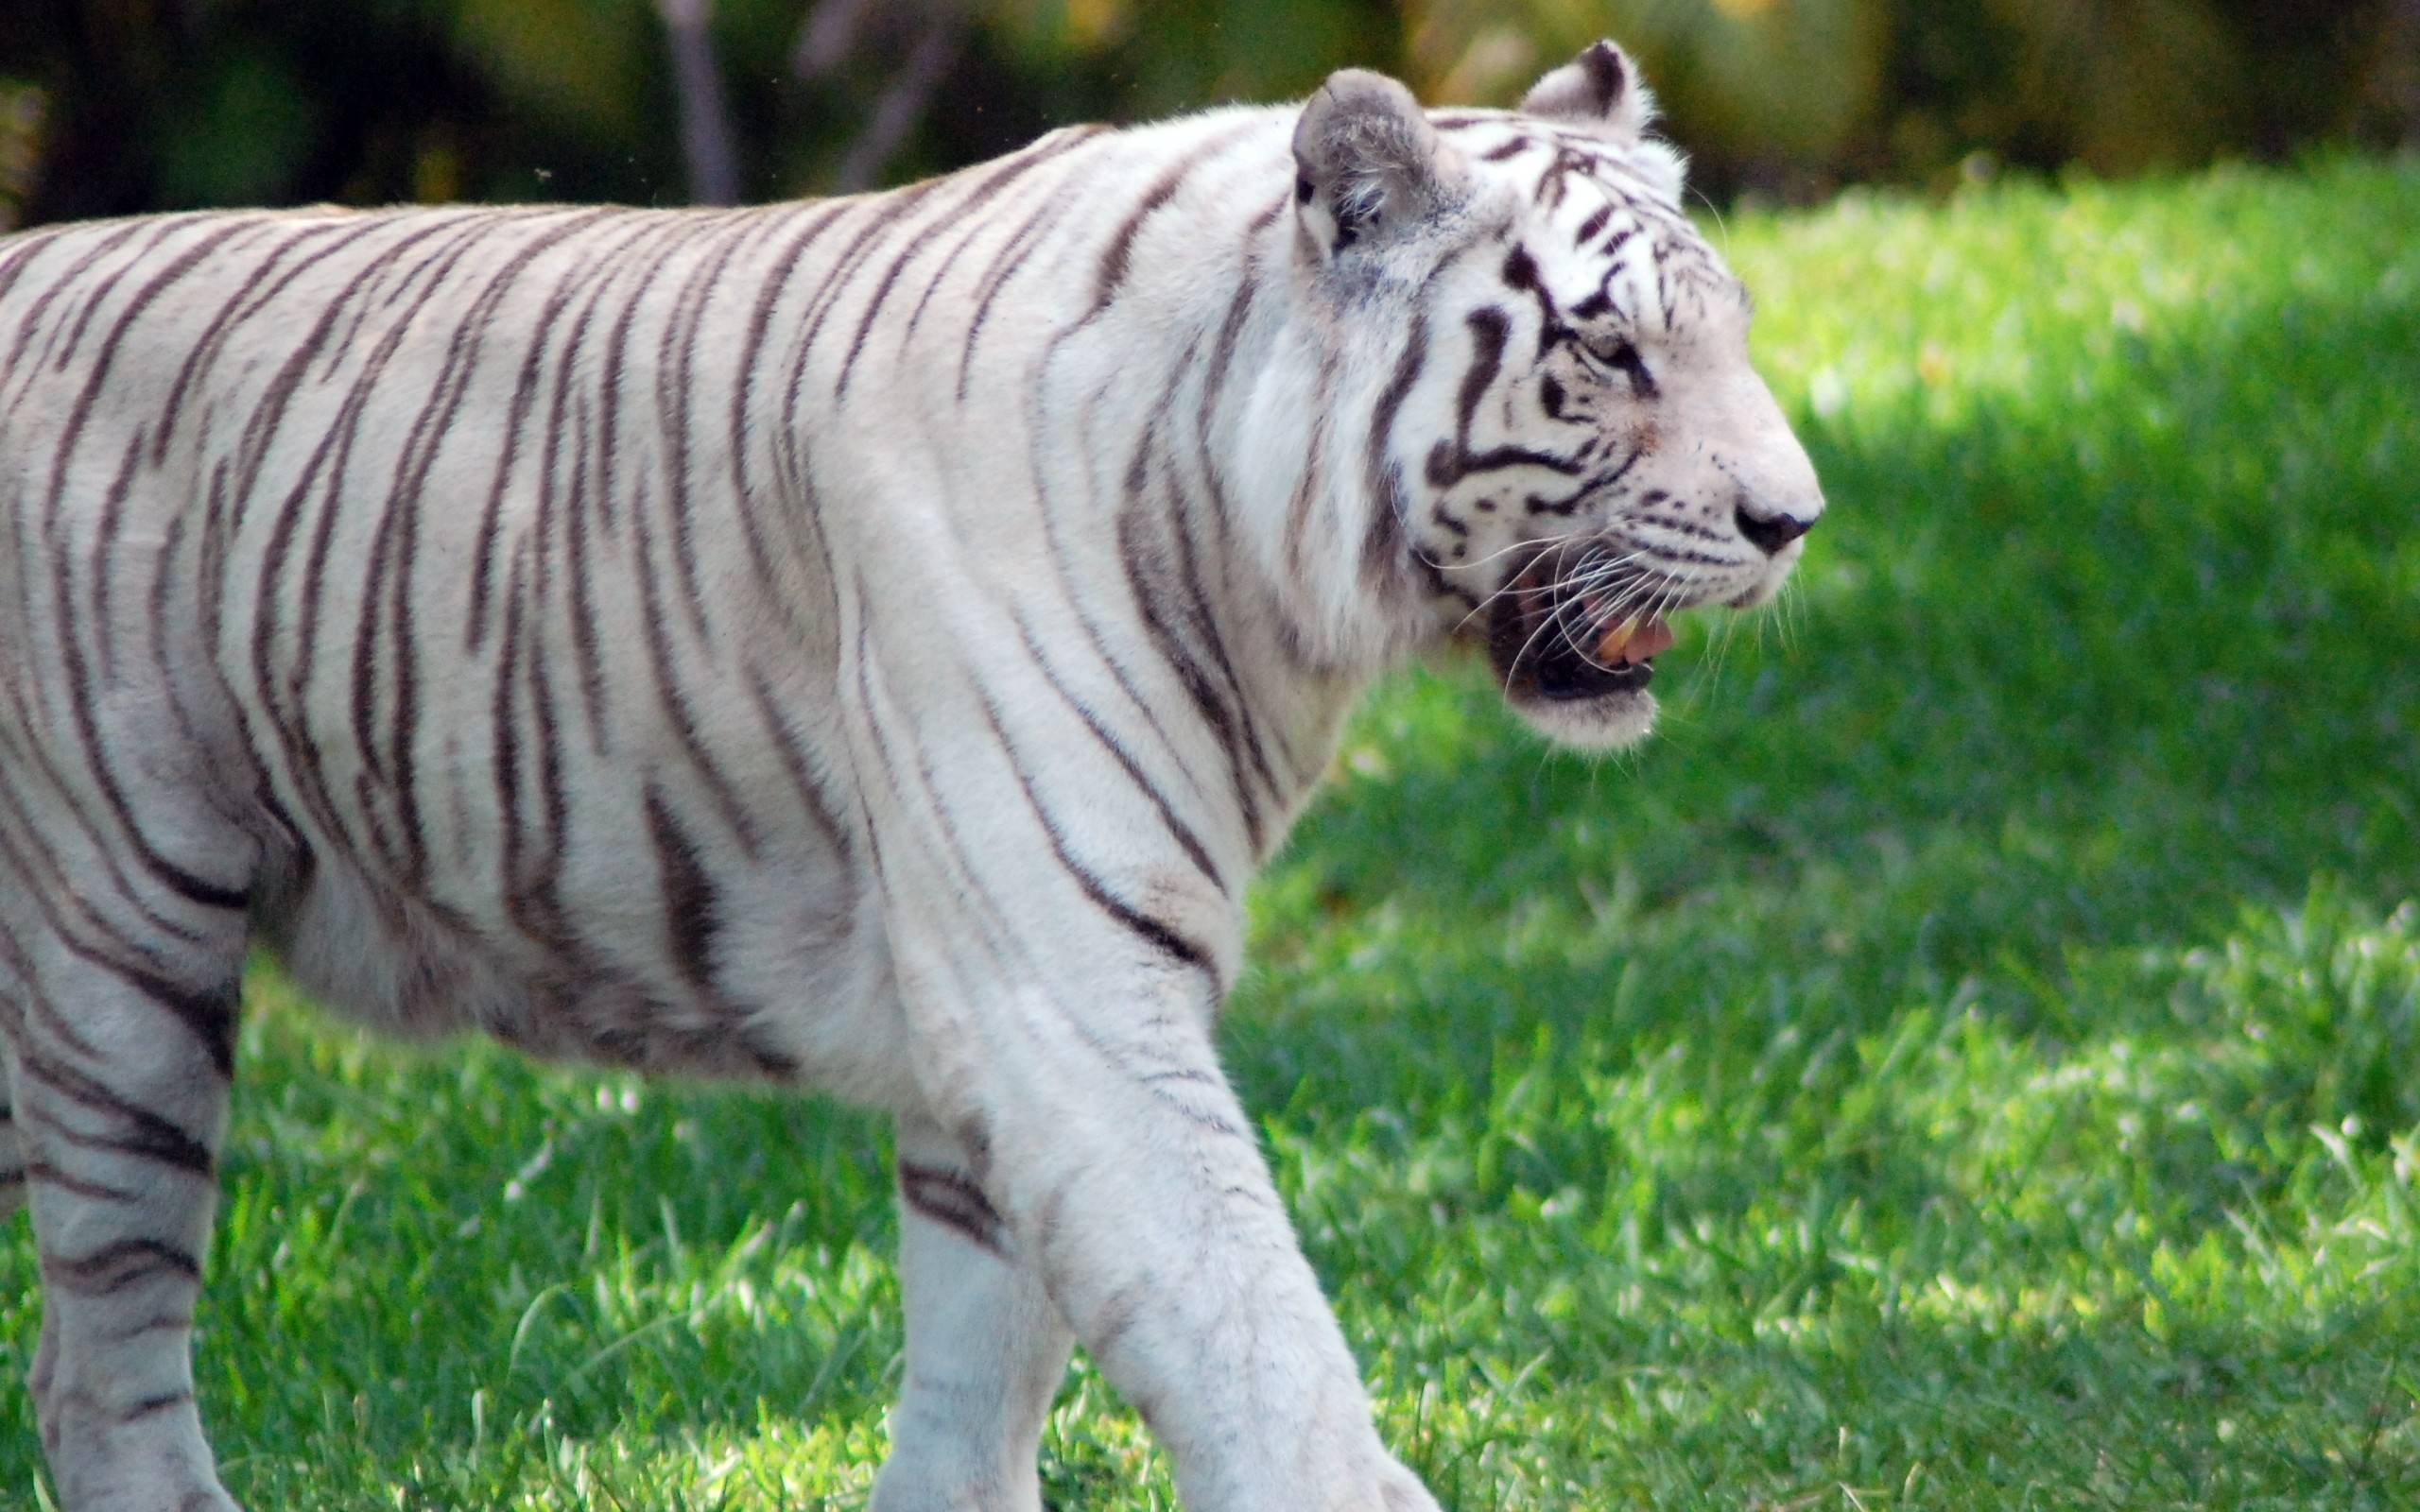 A white tiger walks on a green lawn